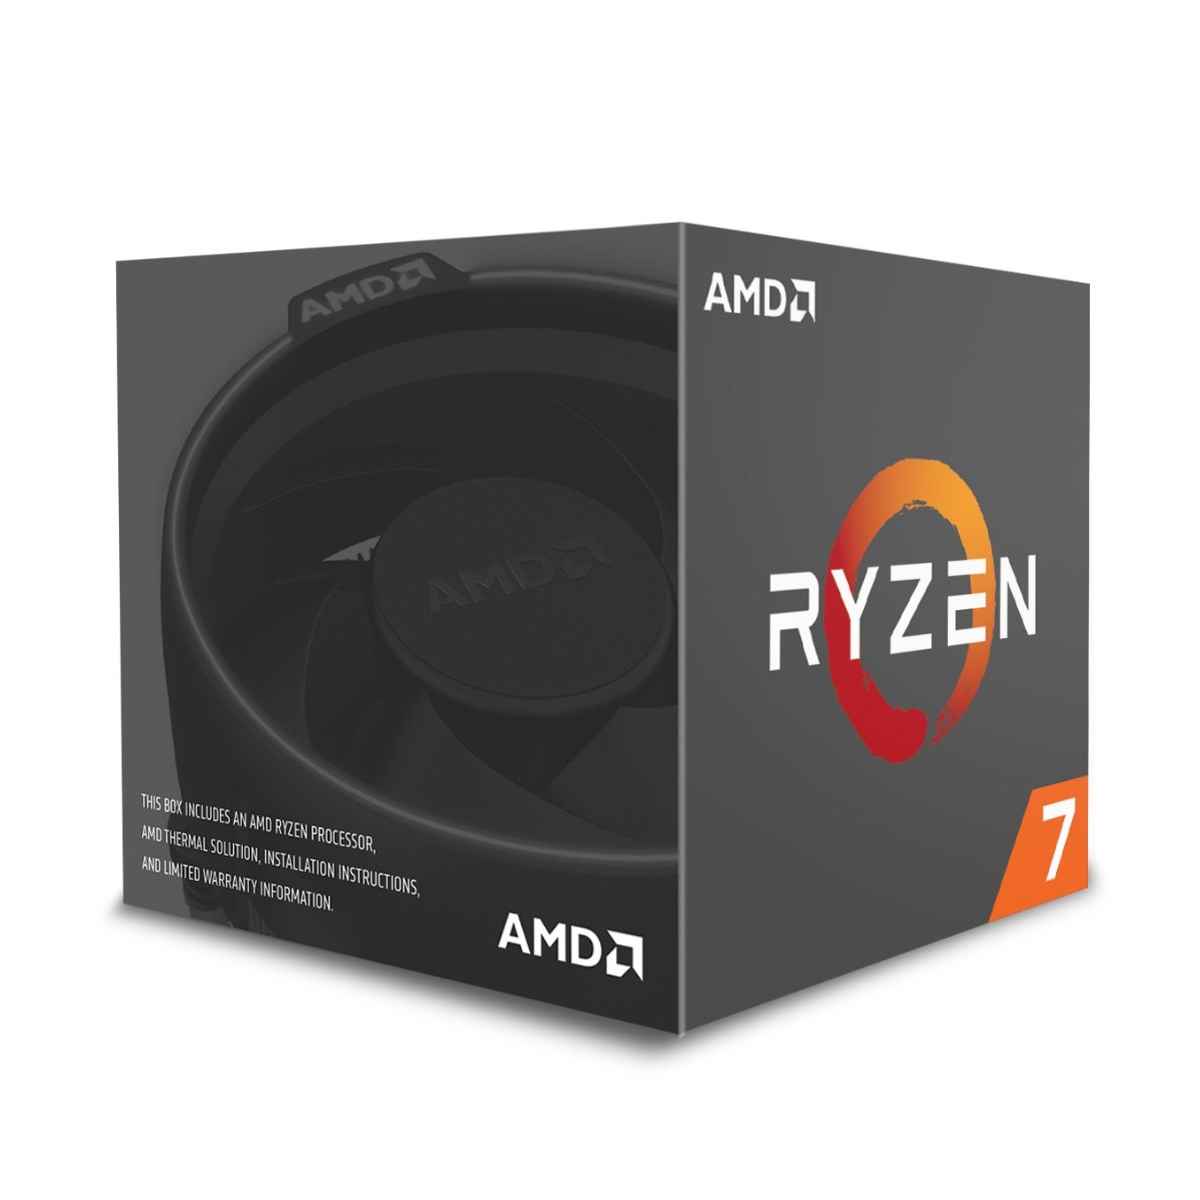 एम्ड Ryzen 7 2700 Desktop प्रोसेसर 